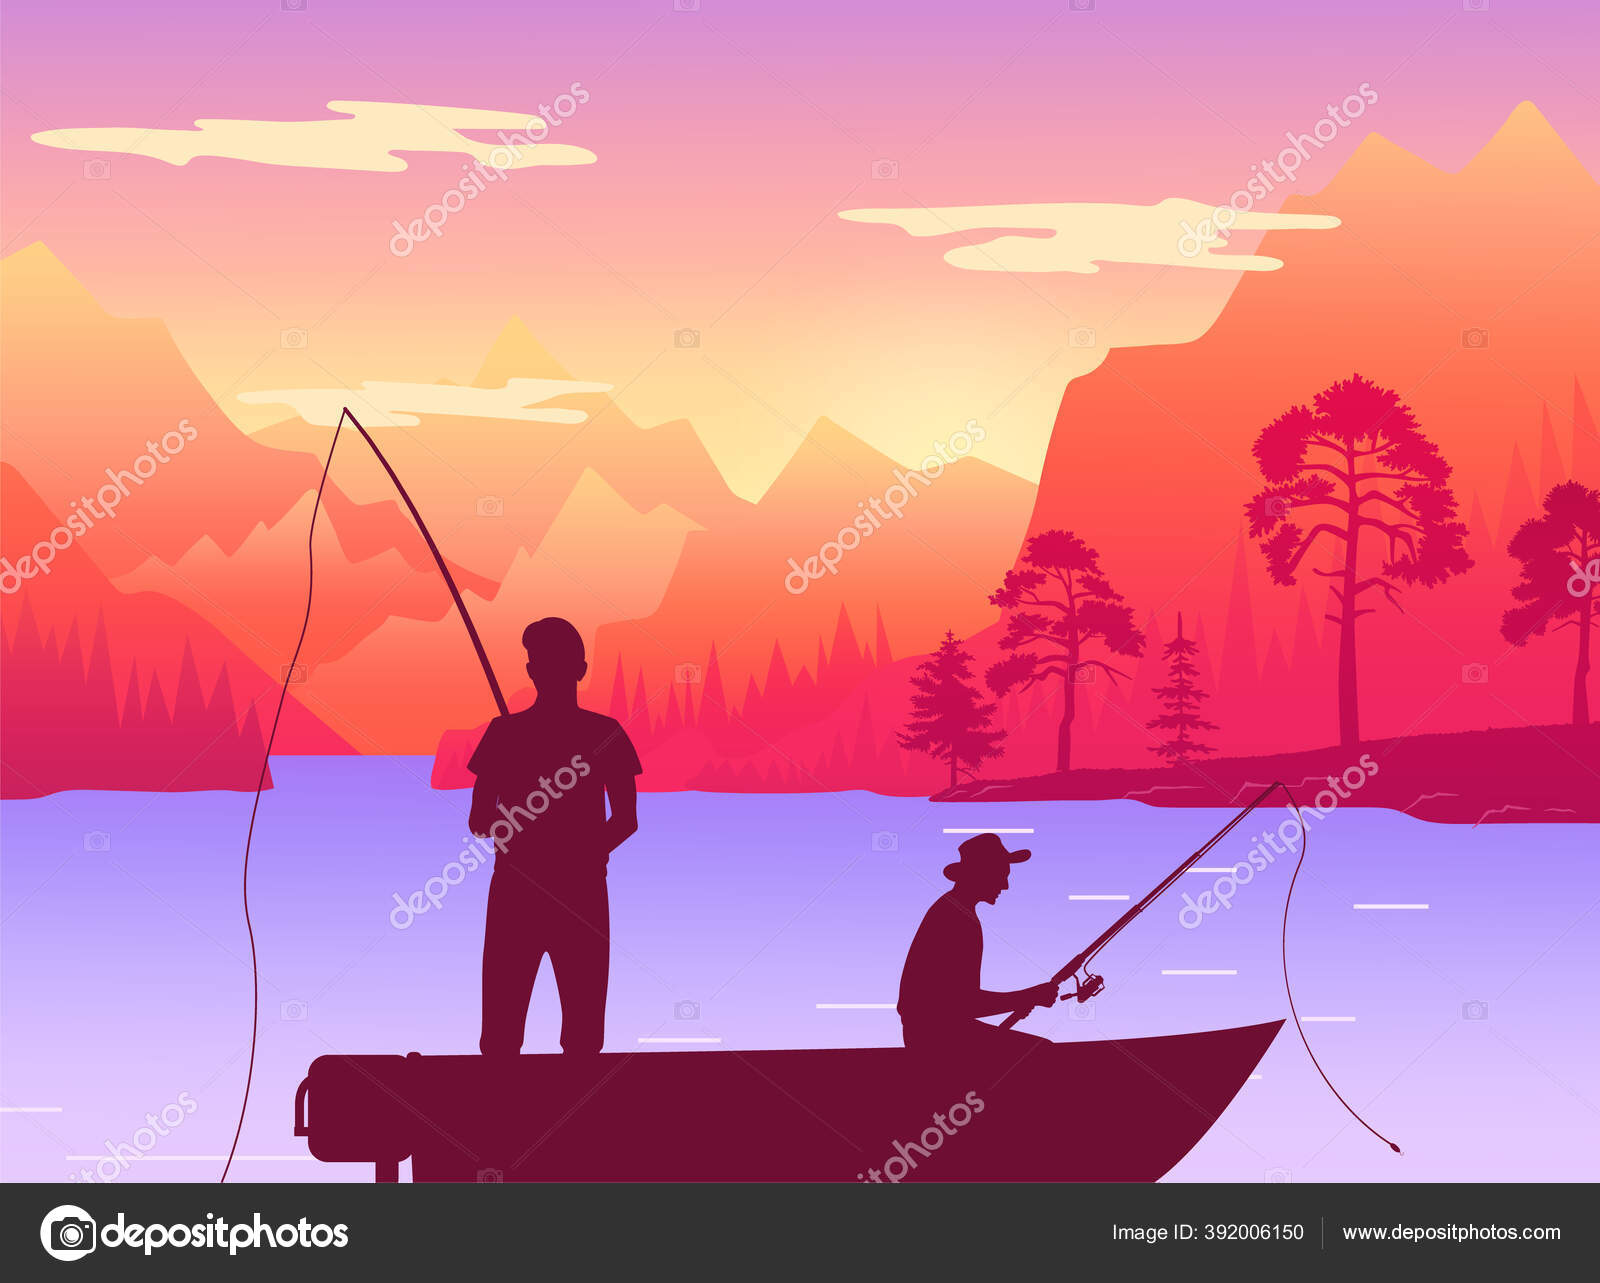 Fishing vessel, silhouettes, fisherman, recreational Fishing